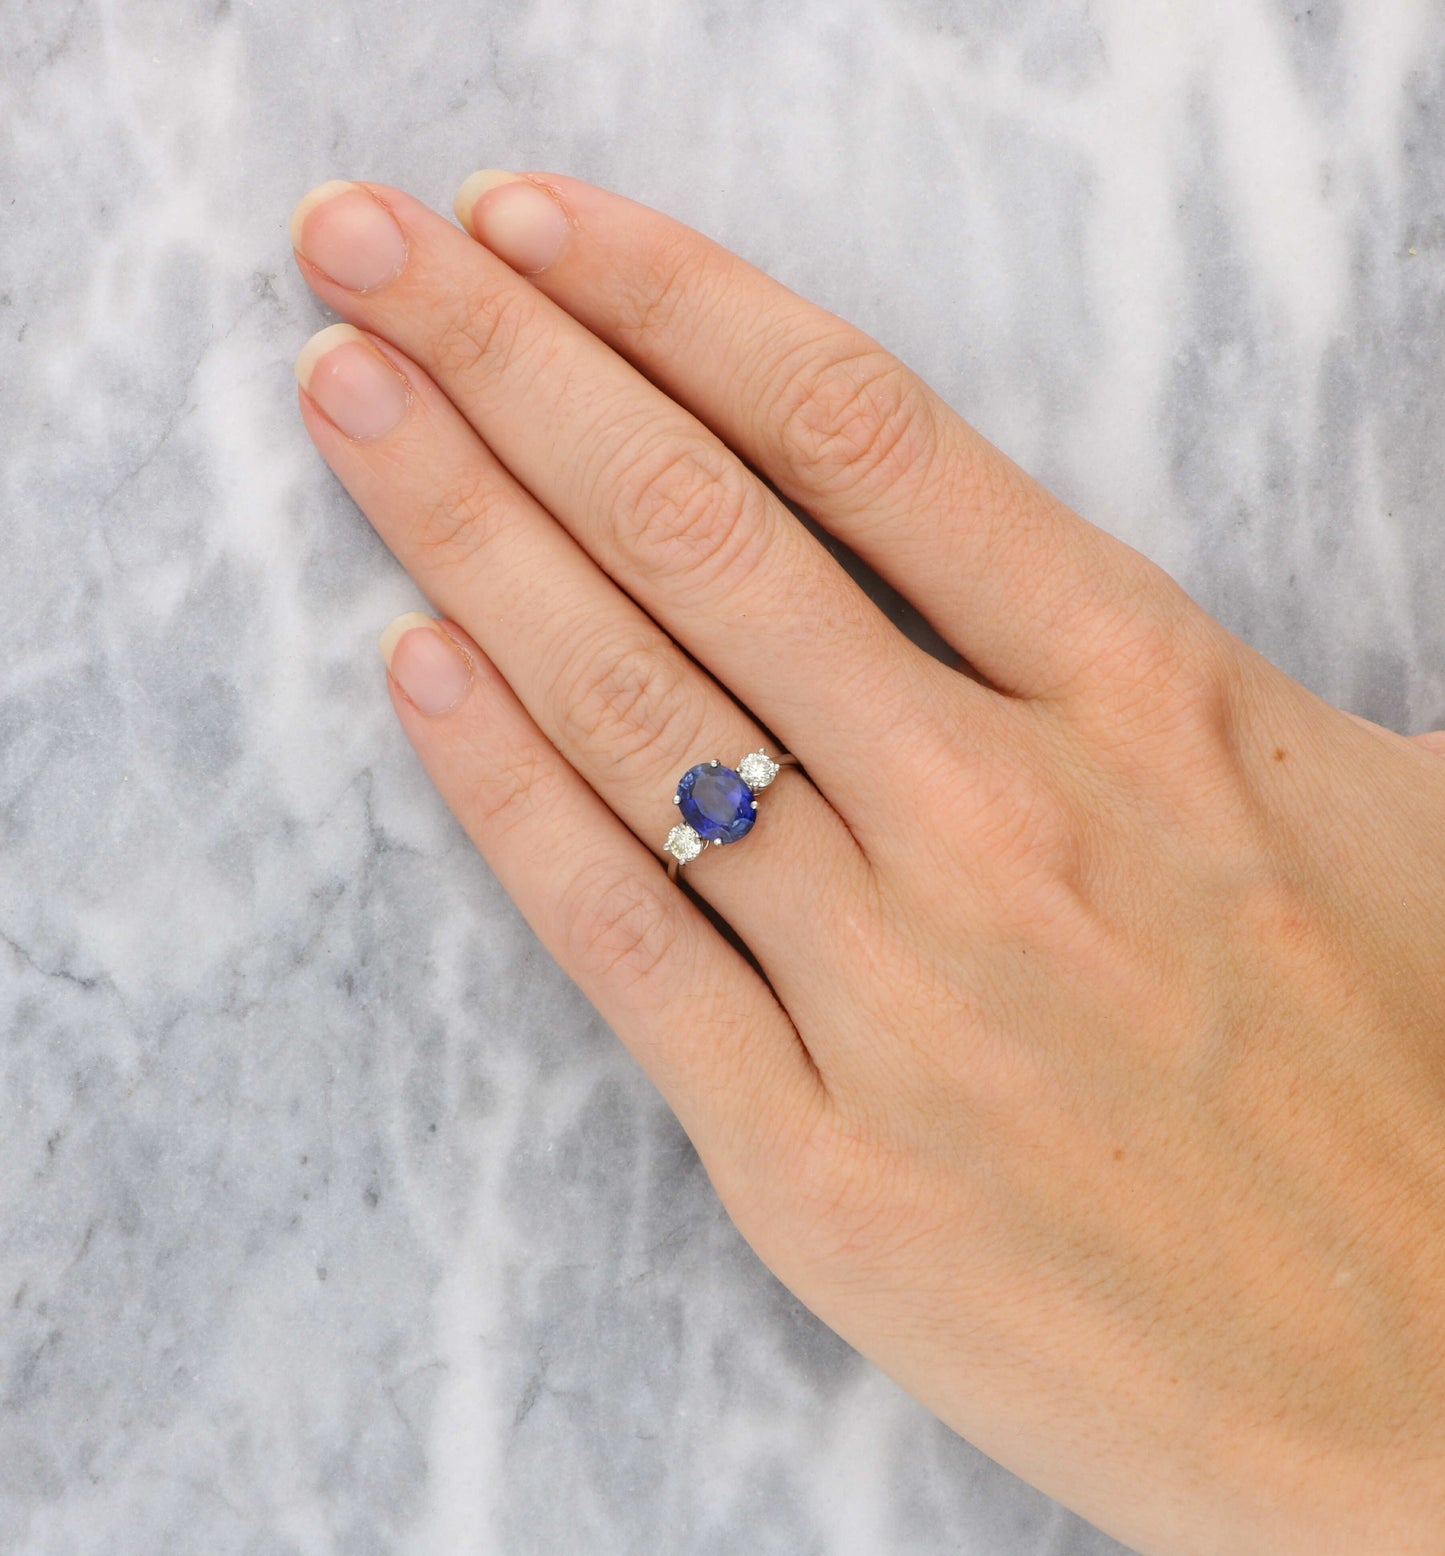 Sapphire and diamond 3 stone engagement ring